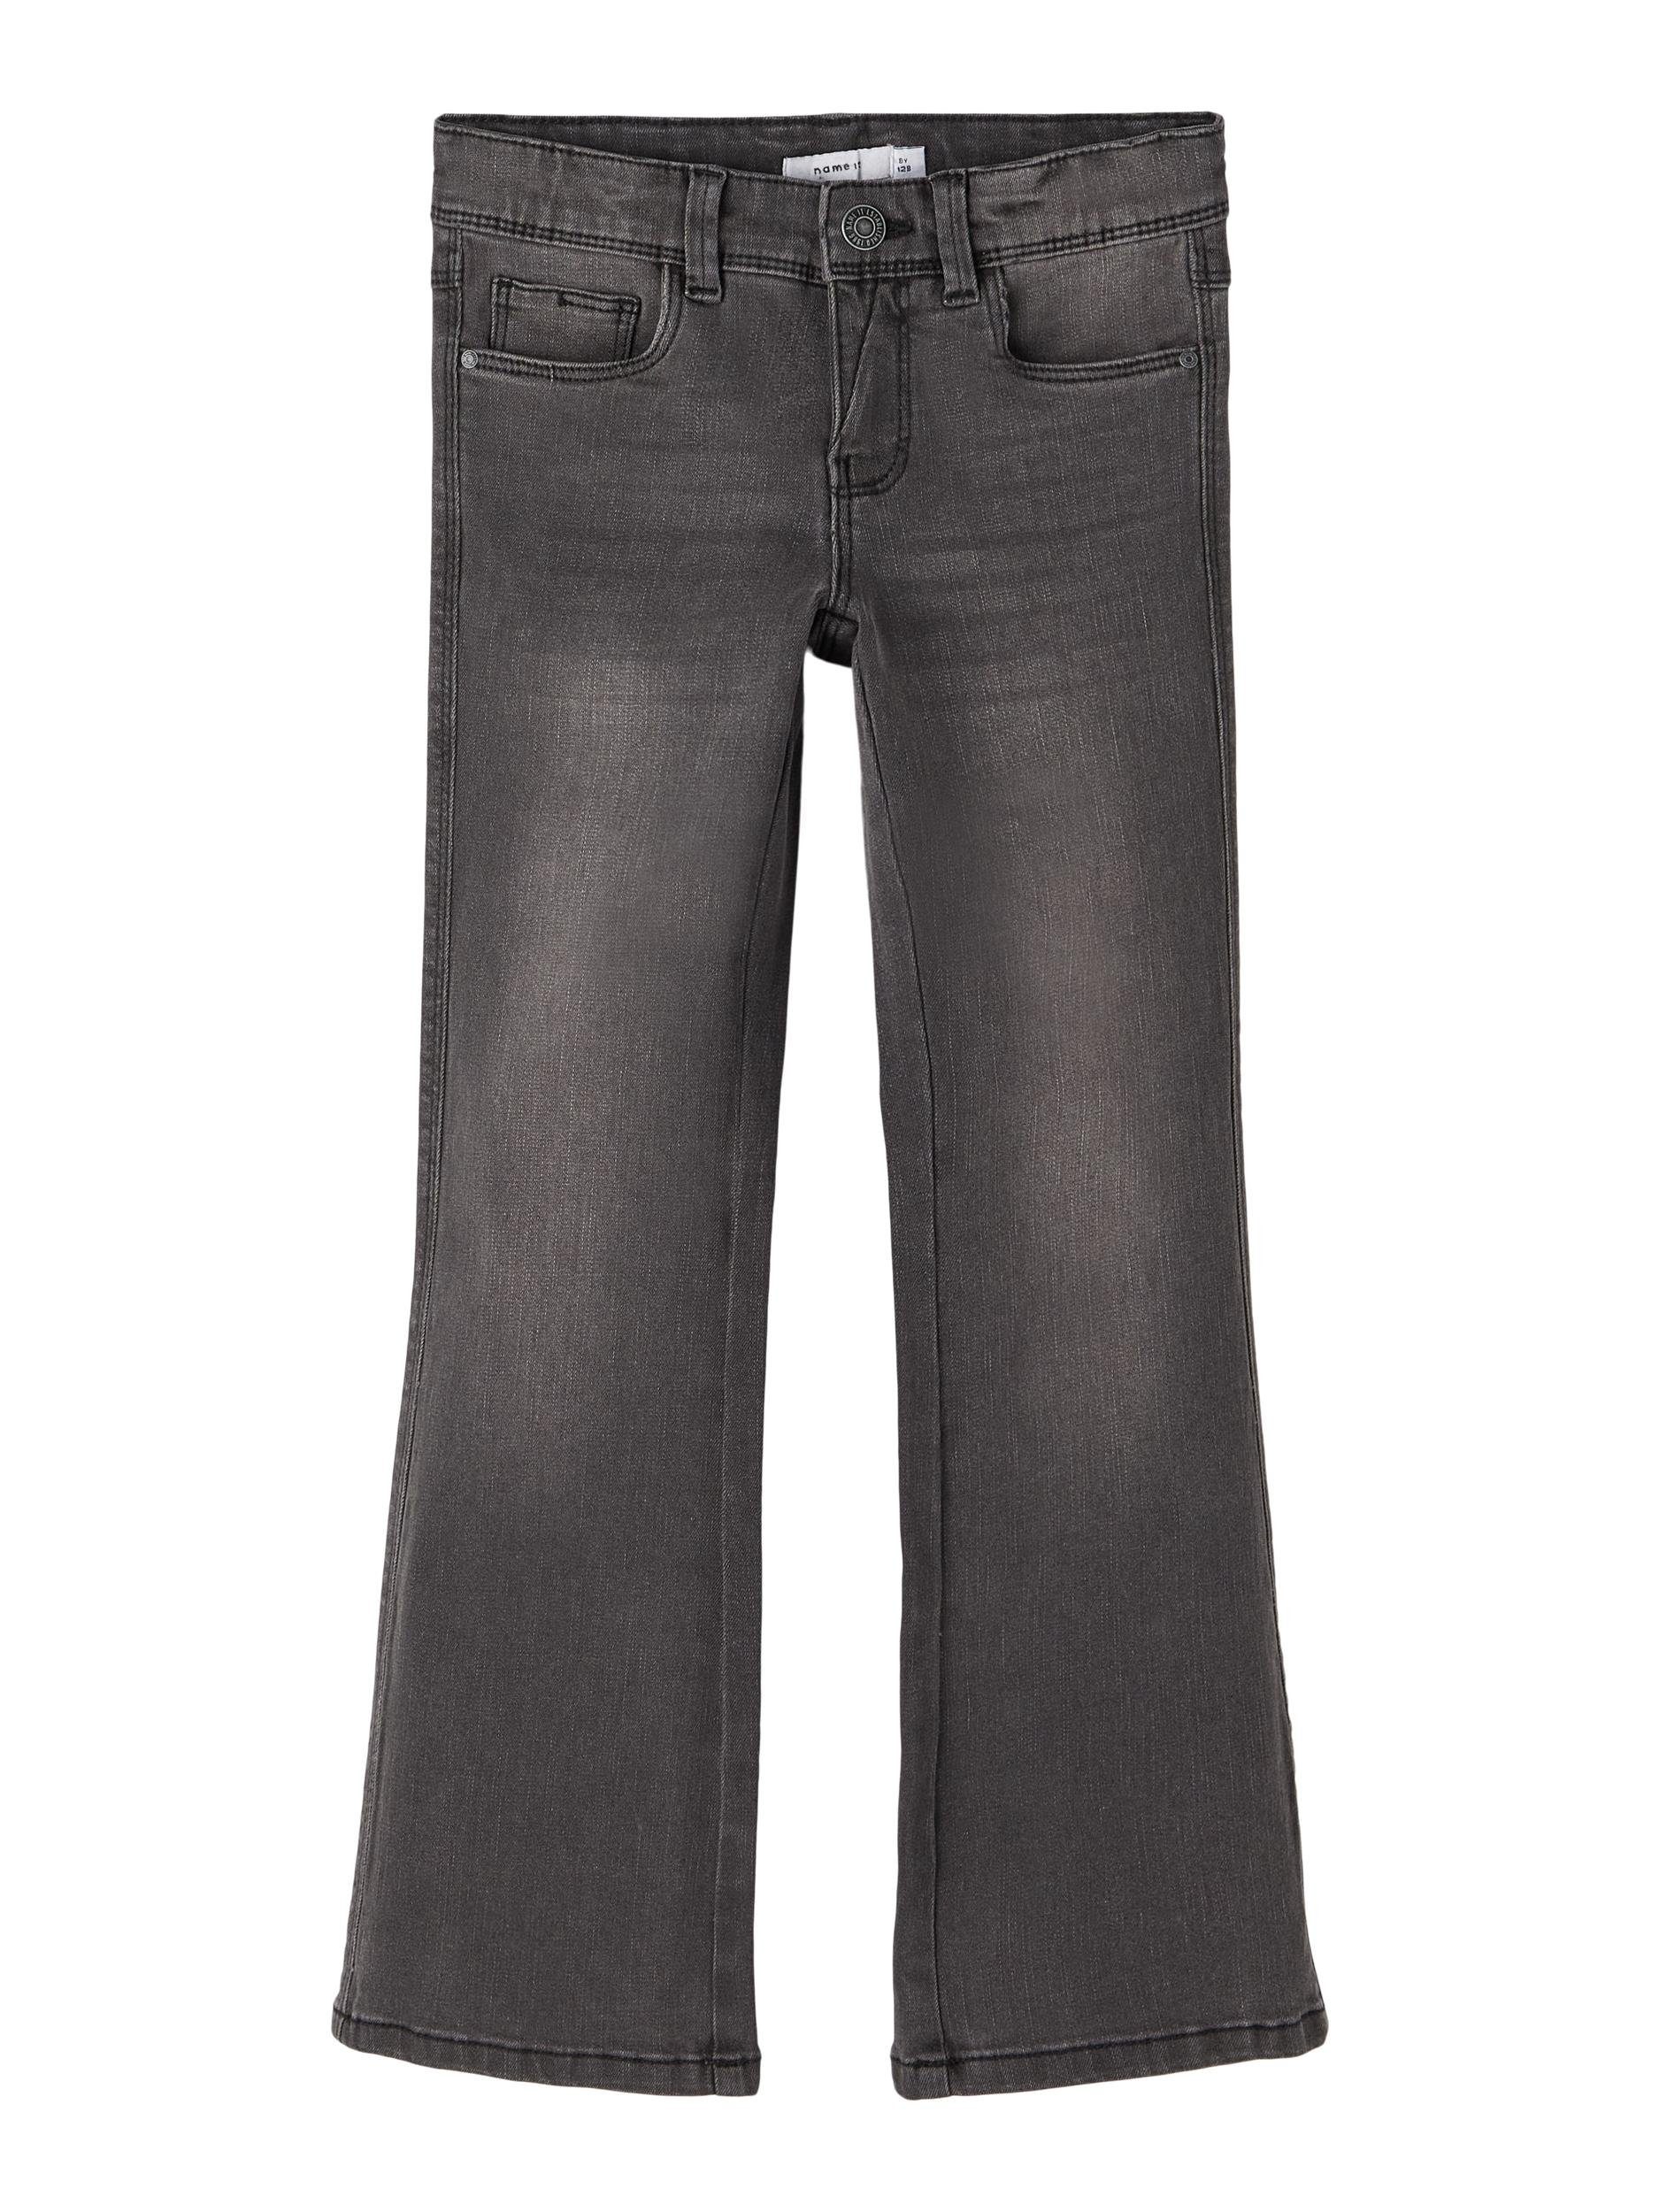 Name It Bootcut-Jeans BOOT NKFPOLLY 1142-AU dark grey NOOS mit Stretch SKINNY JEANS denim